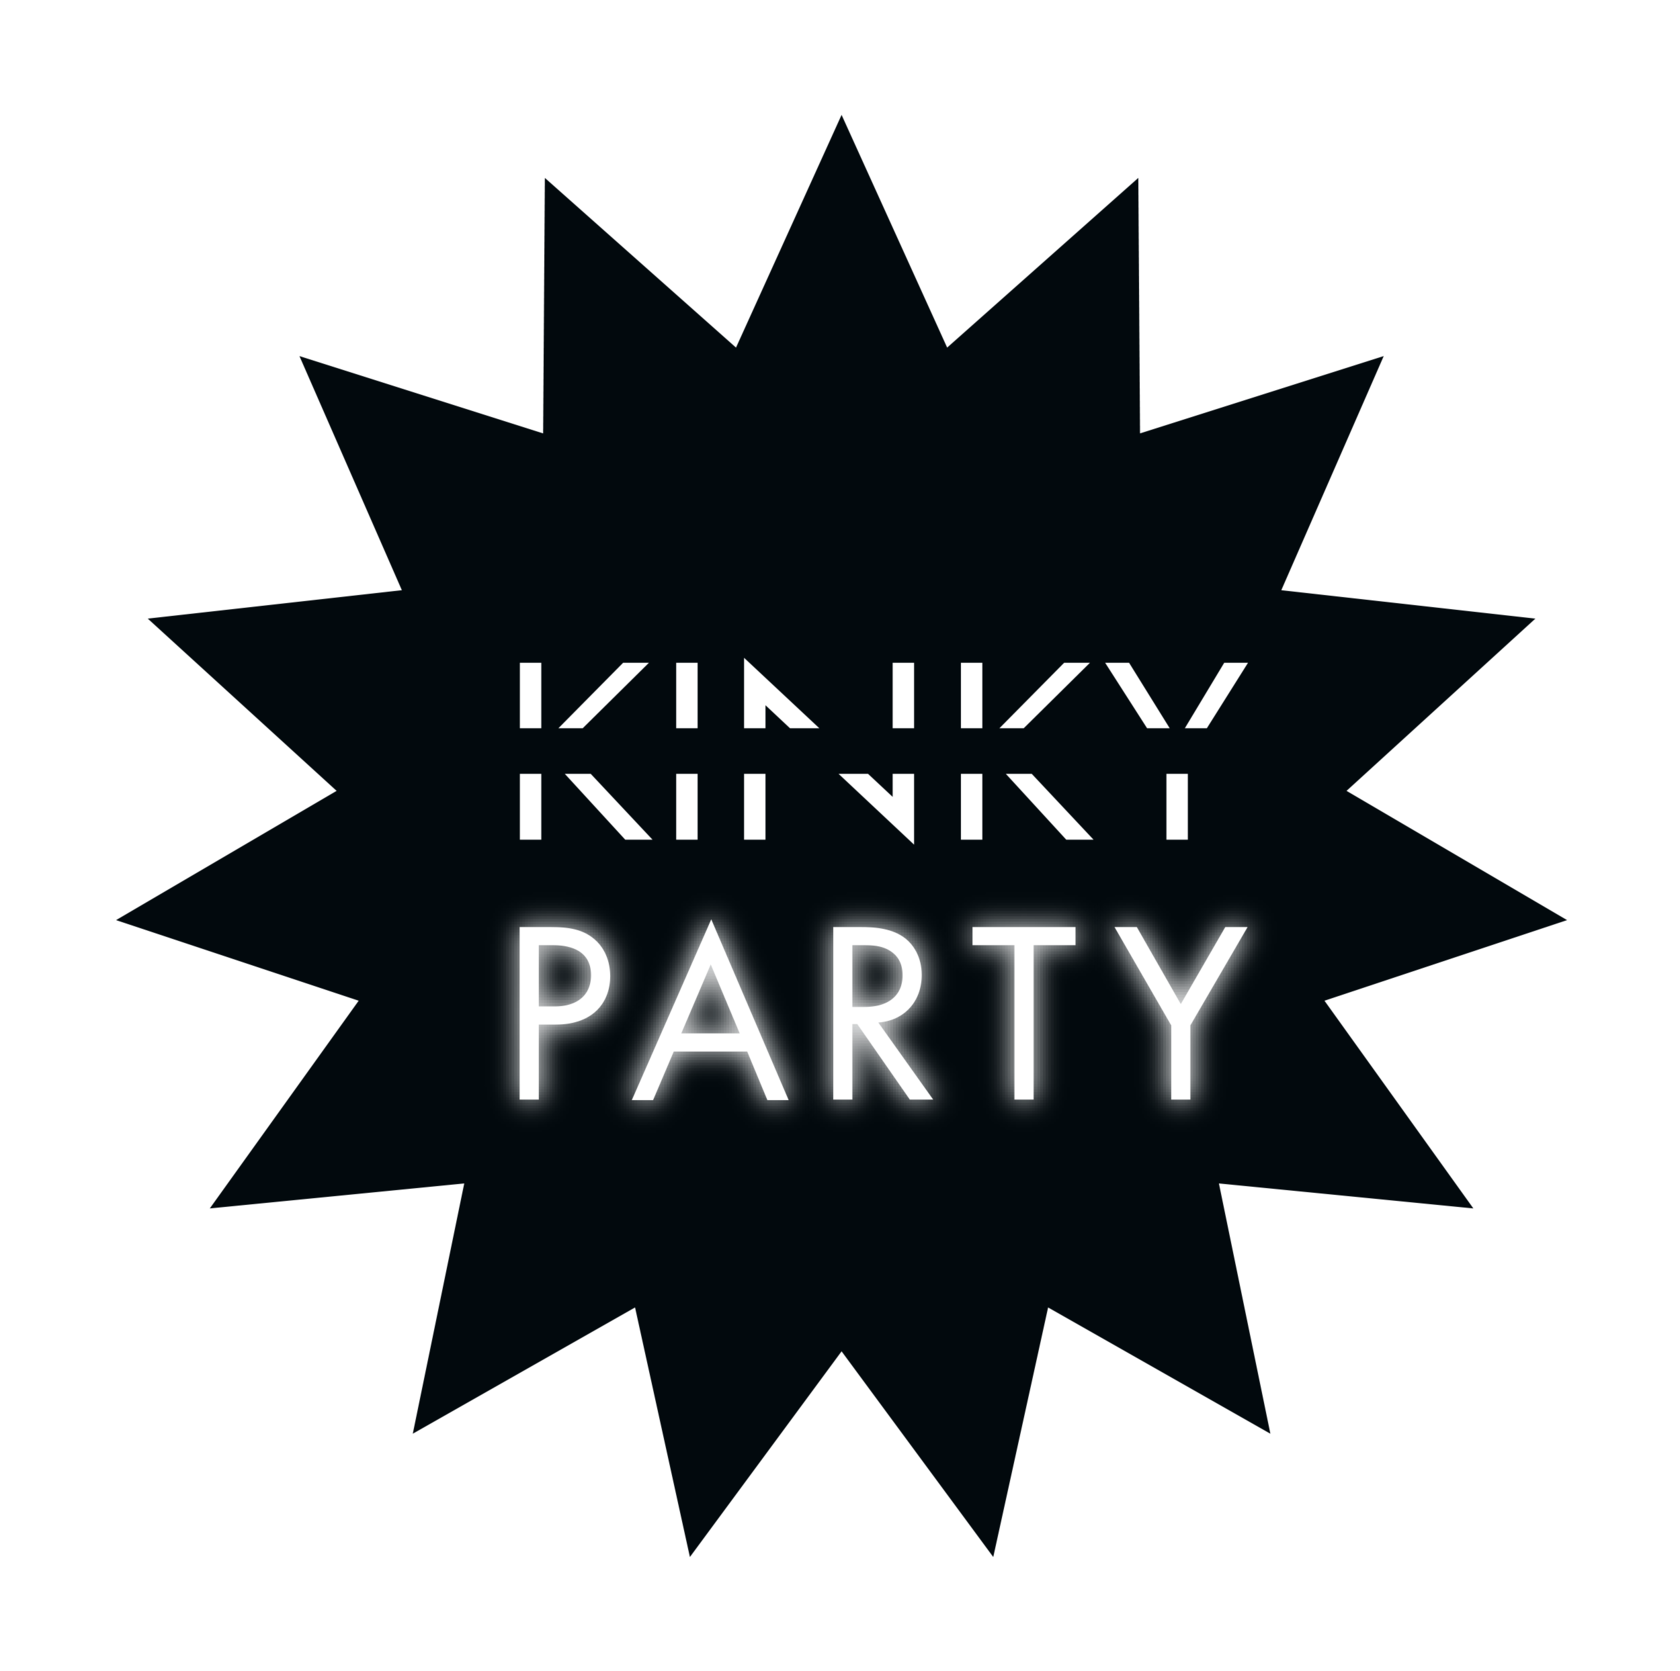 KINKY PARTY